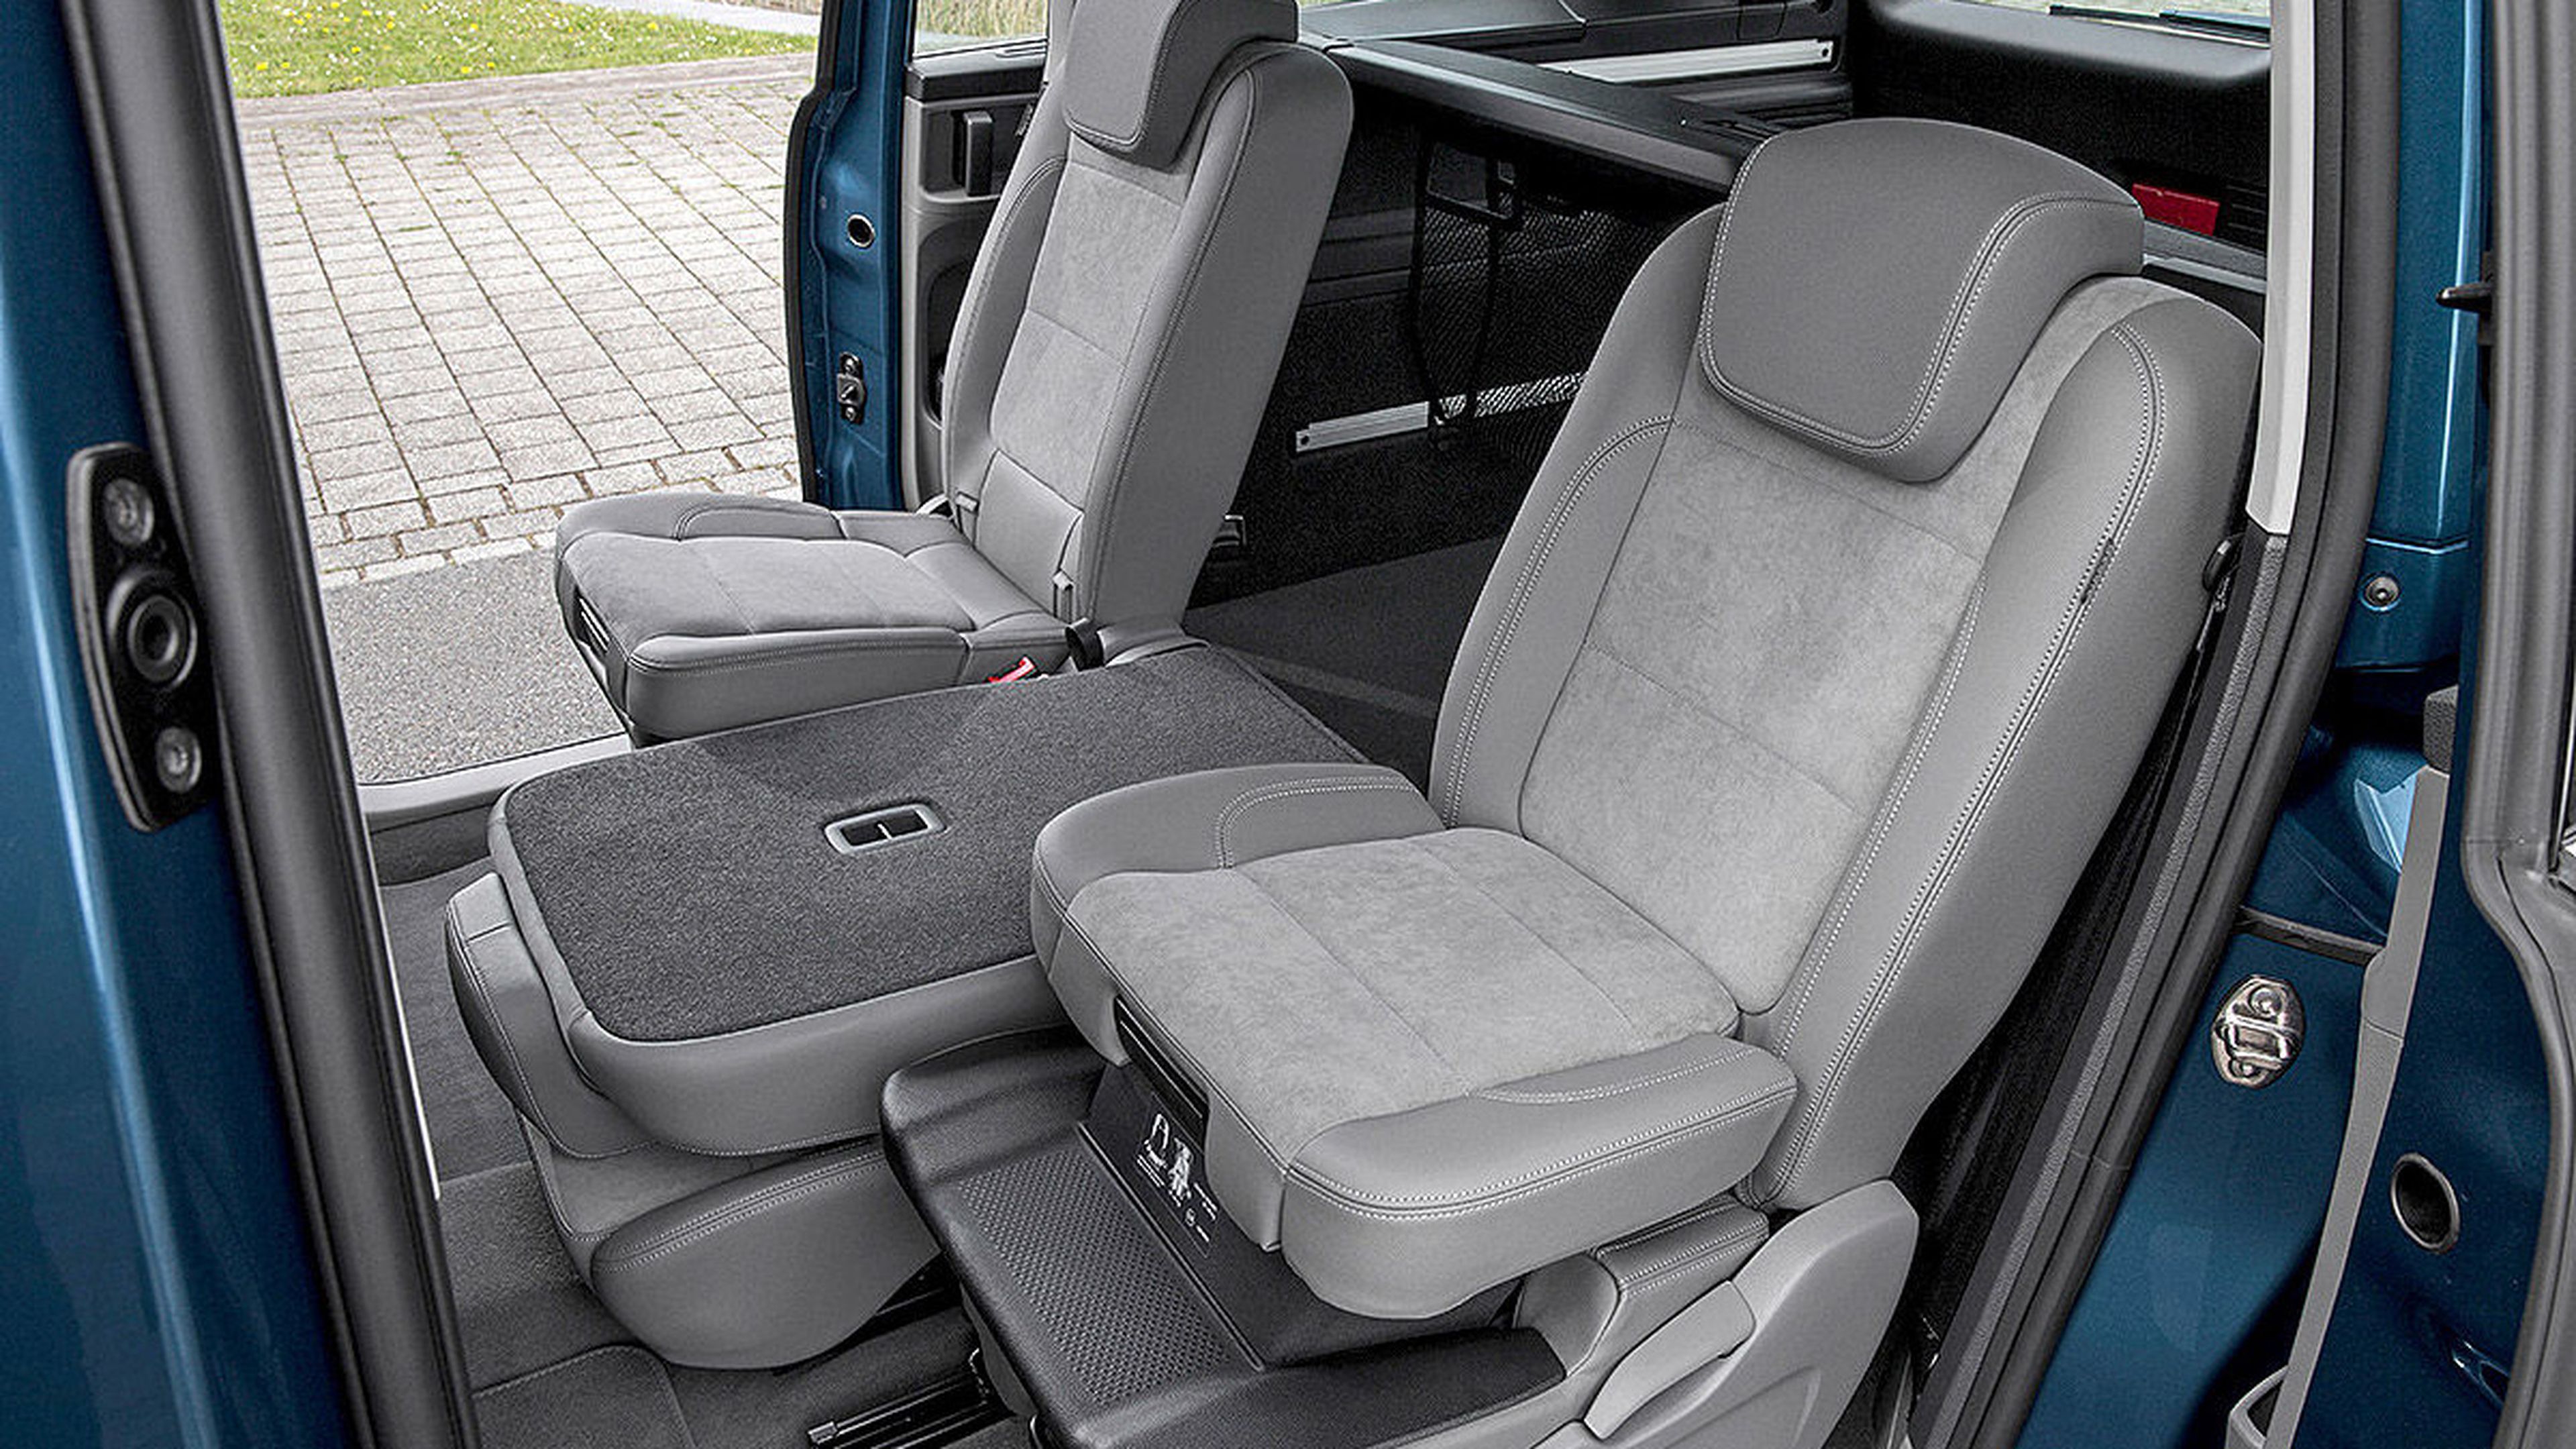 Volkswagen Sharan facelift 2015 asiento abatido